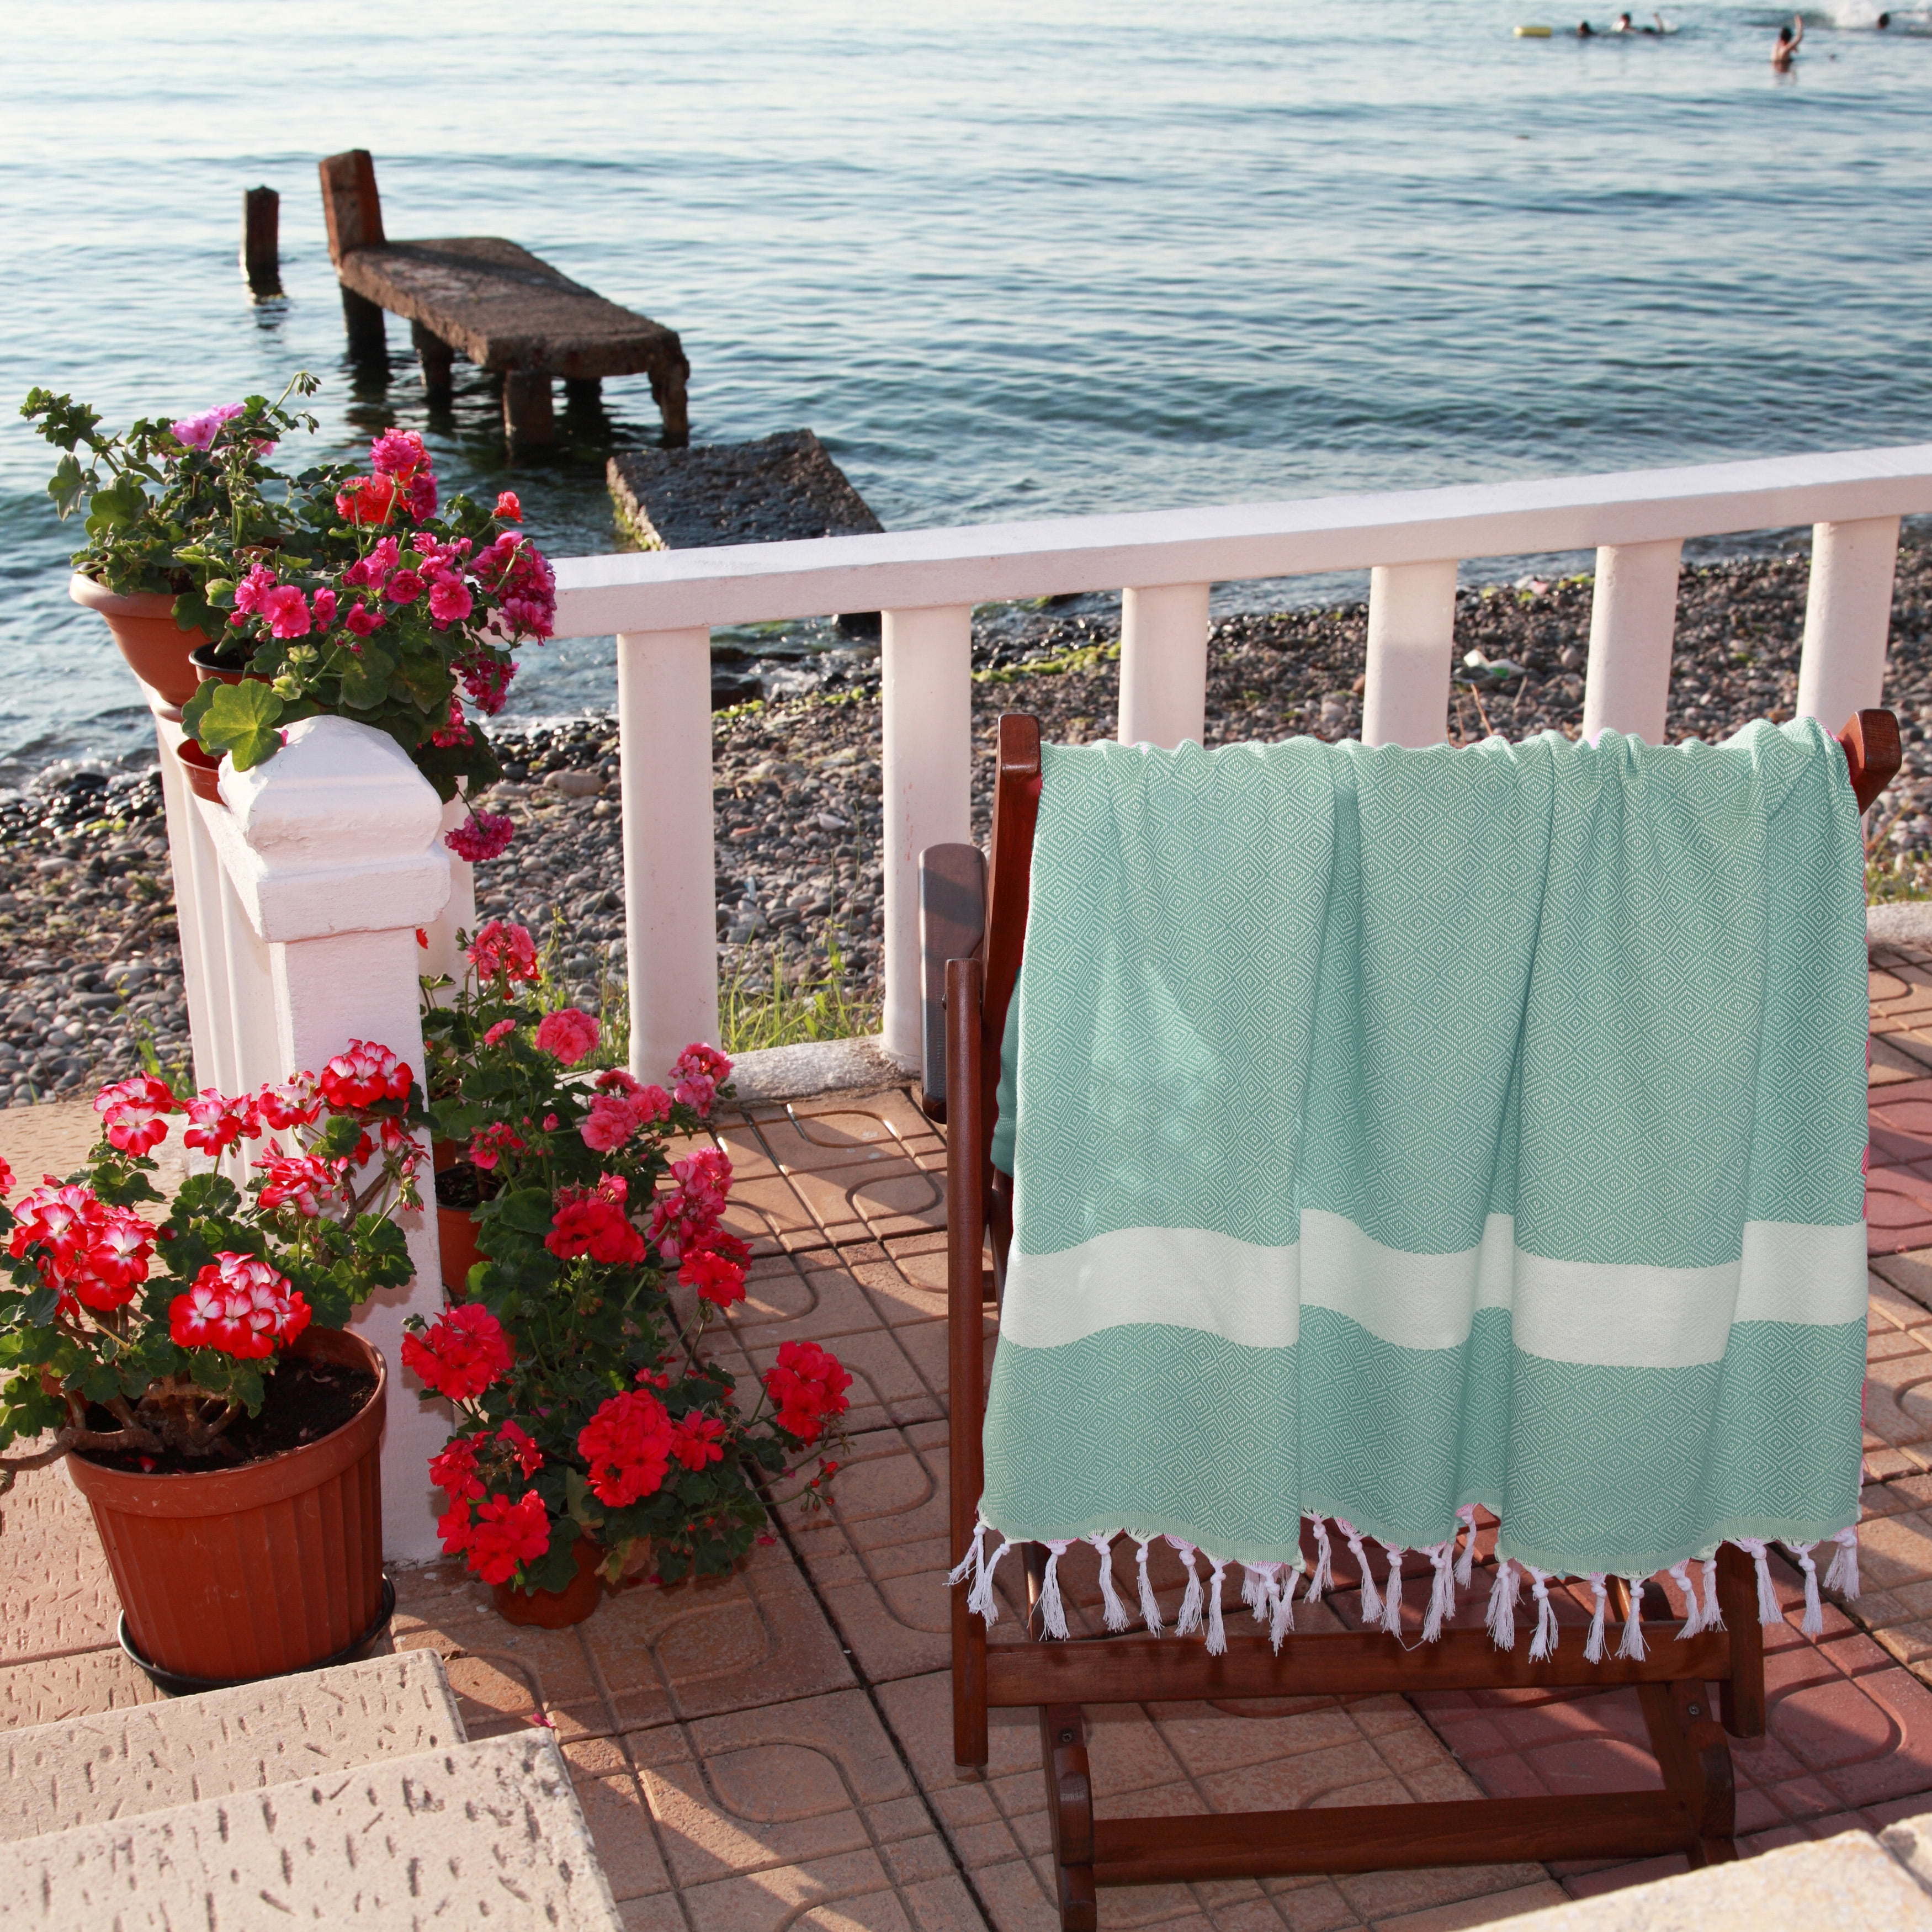 30 Colors / Thick / Diamond / Turkish Towels, Peshtemal, Pool Towels, Beach  Towel, Fouta Towel, Bridesmaid Gift. 